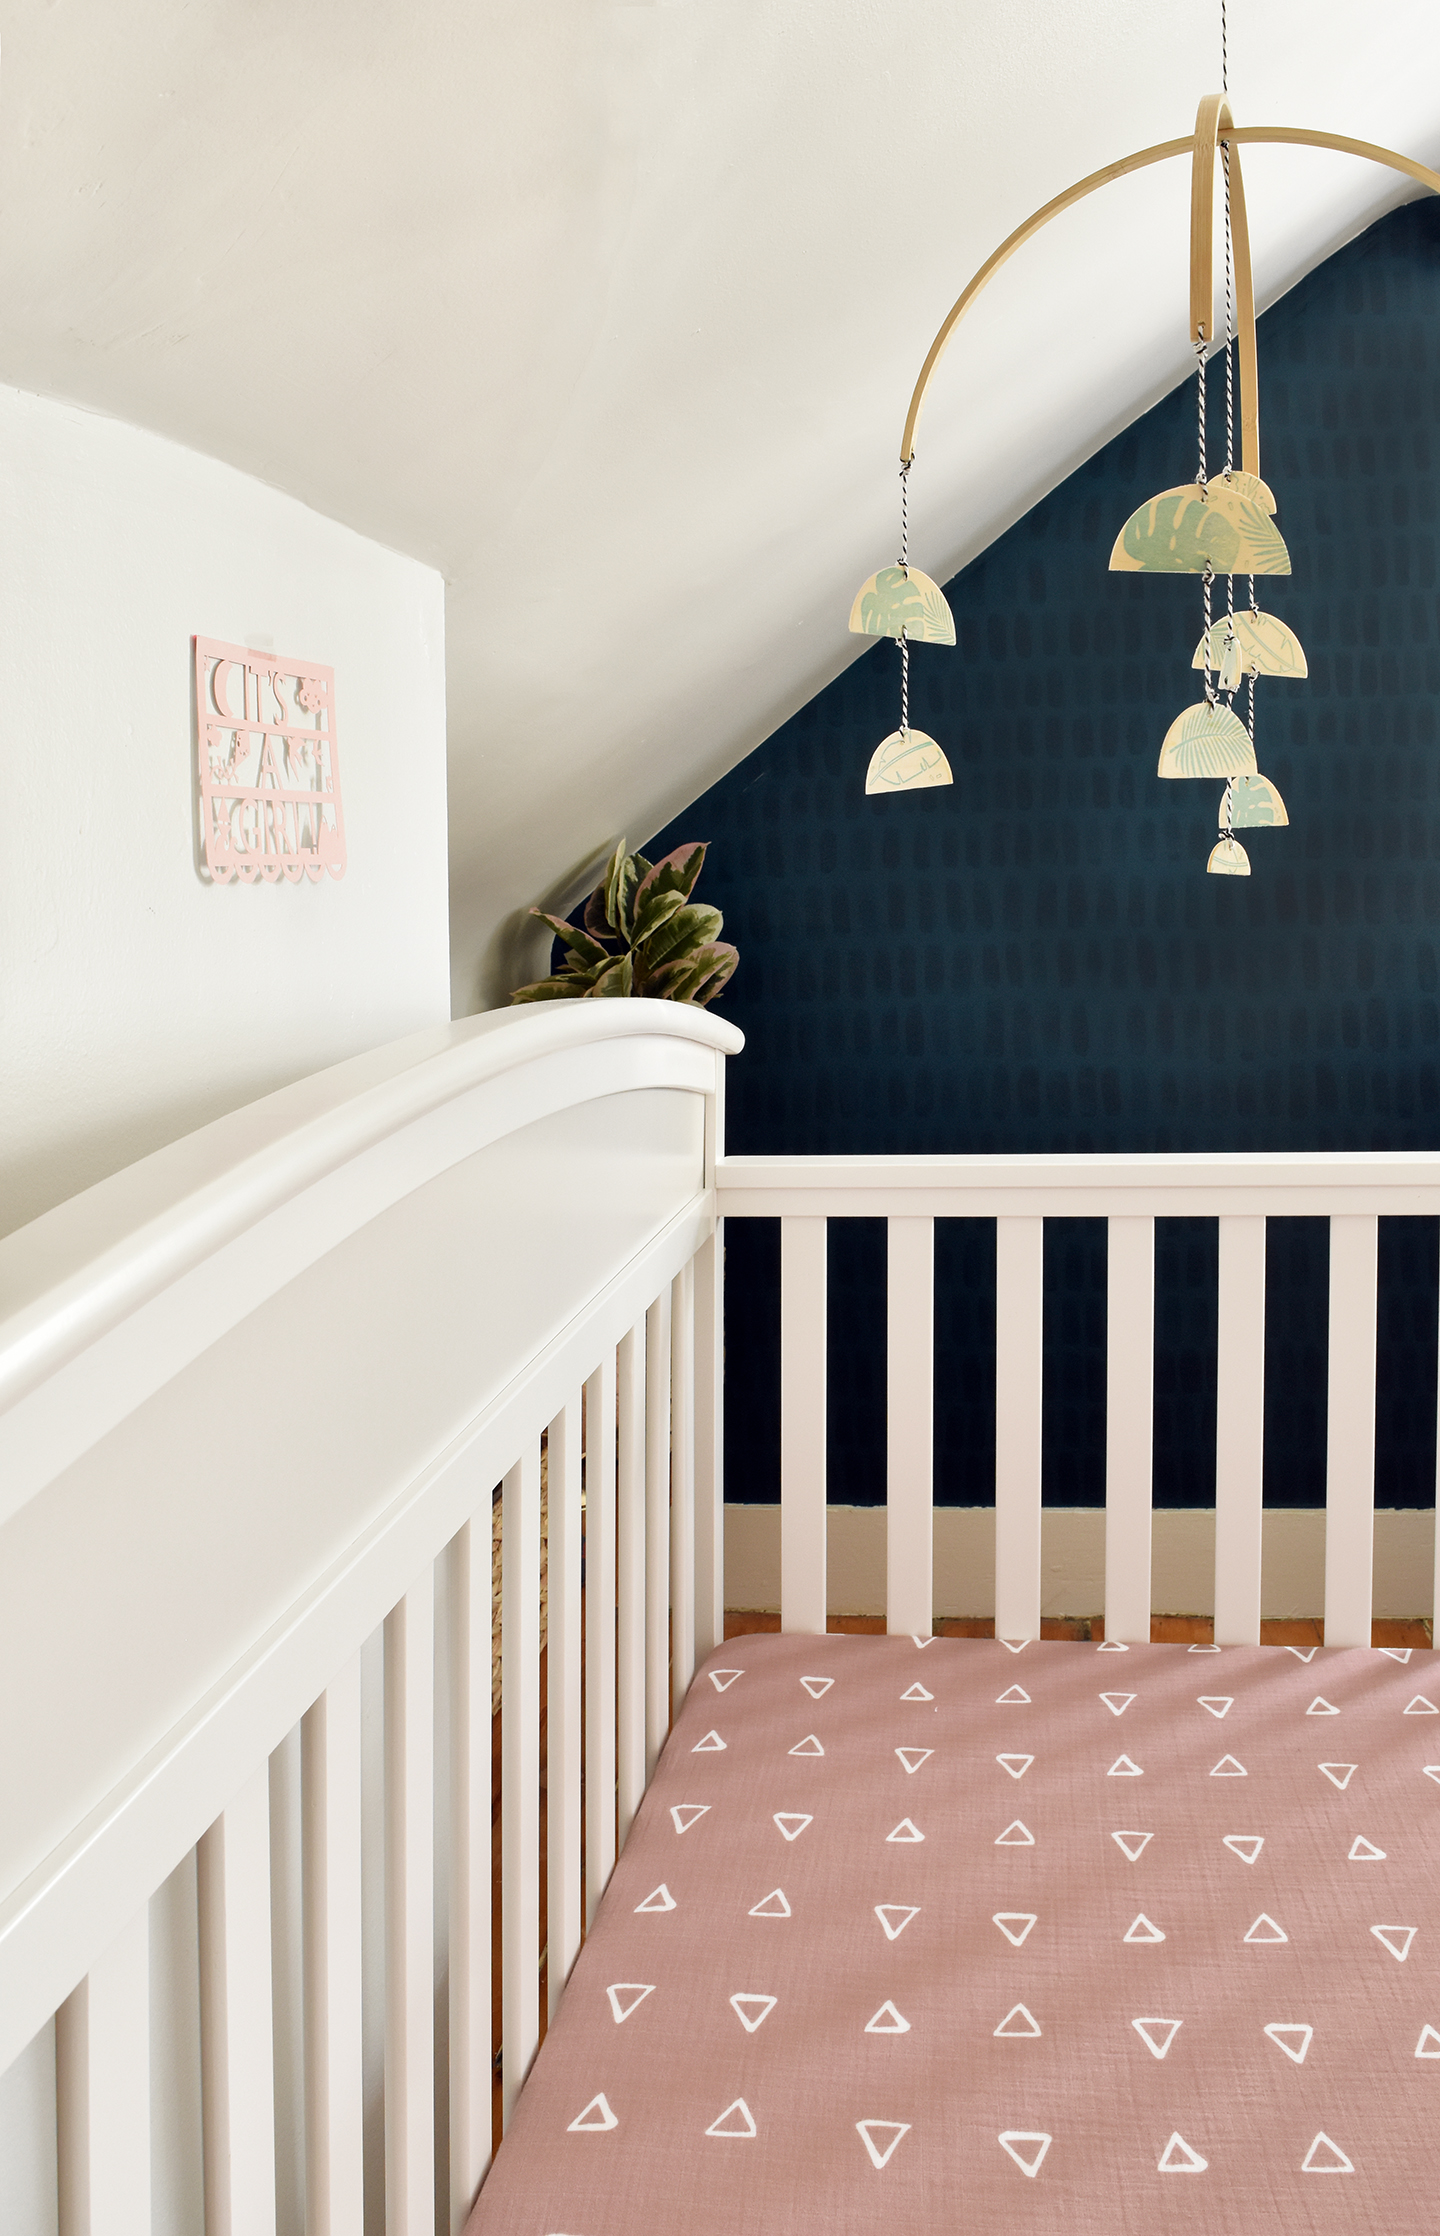 Dark teal and muted pink nursery inspiration! | Nursery Decor: A Nursery Tour + Shopping Links (Part 2) /// By Design Fixation #baby #ideas #nursery #decor